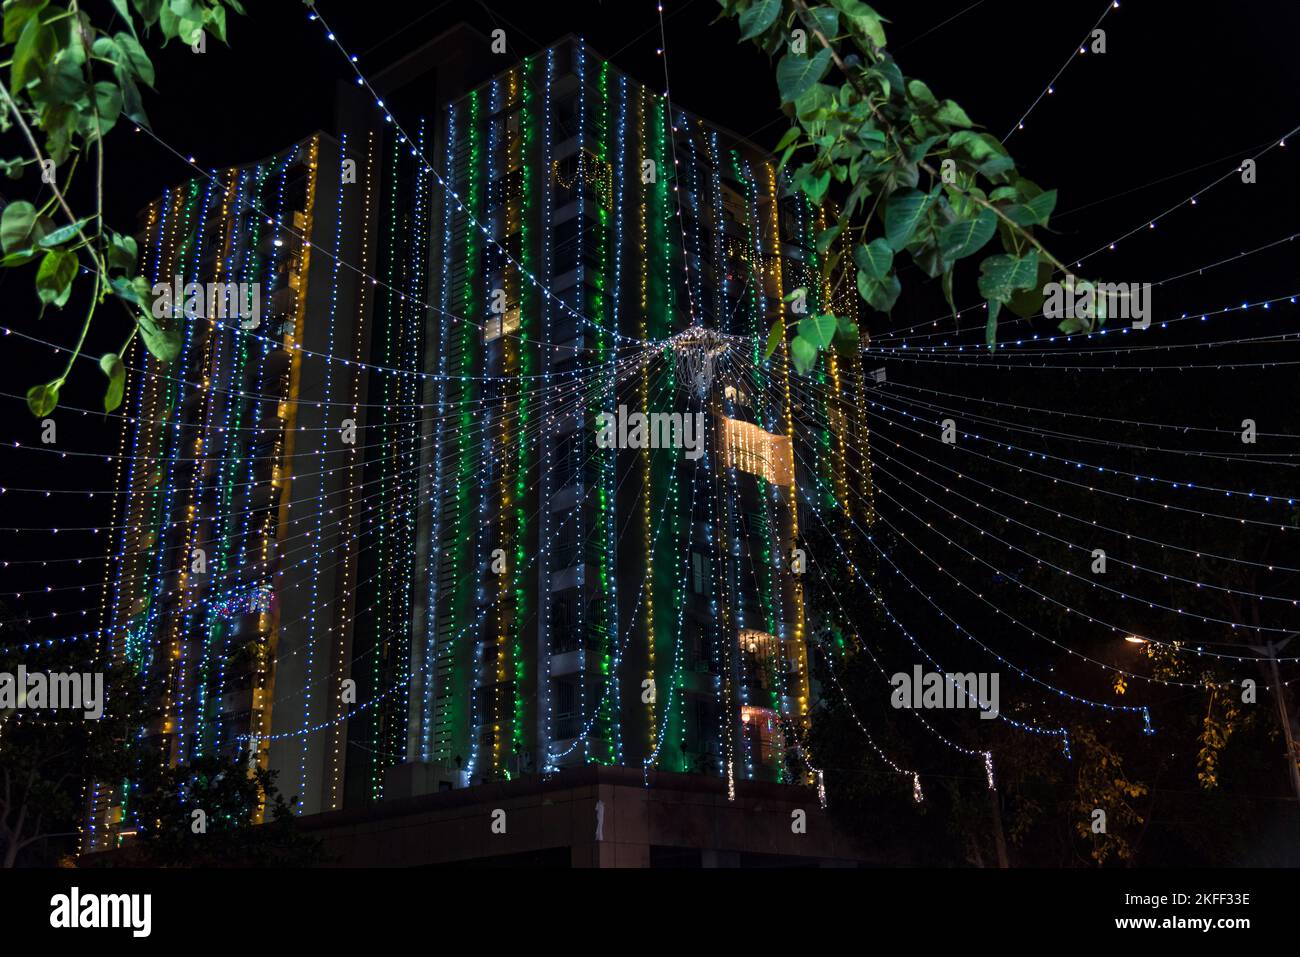 Décoration lumineuse de rue, festival de Diwali, Lokhandwala, Andheri, Bombay, Mumbai, Maharashtra, Inde Banque D'Images